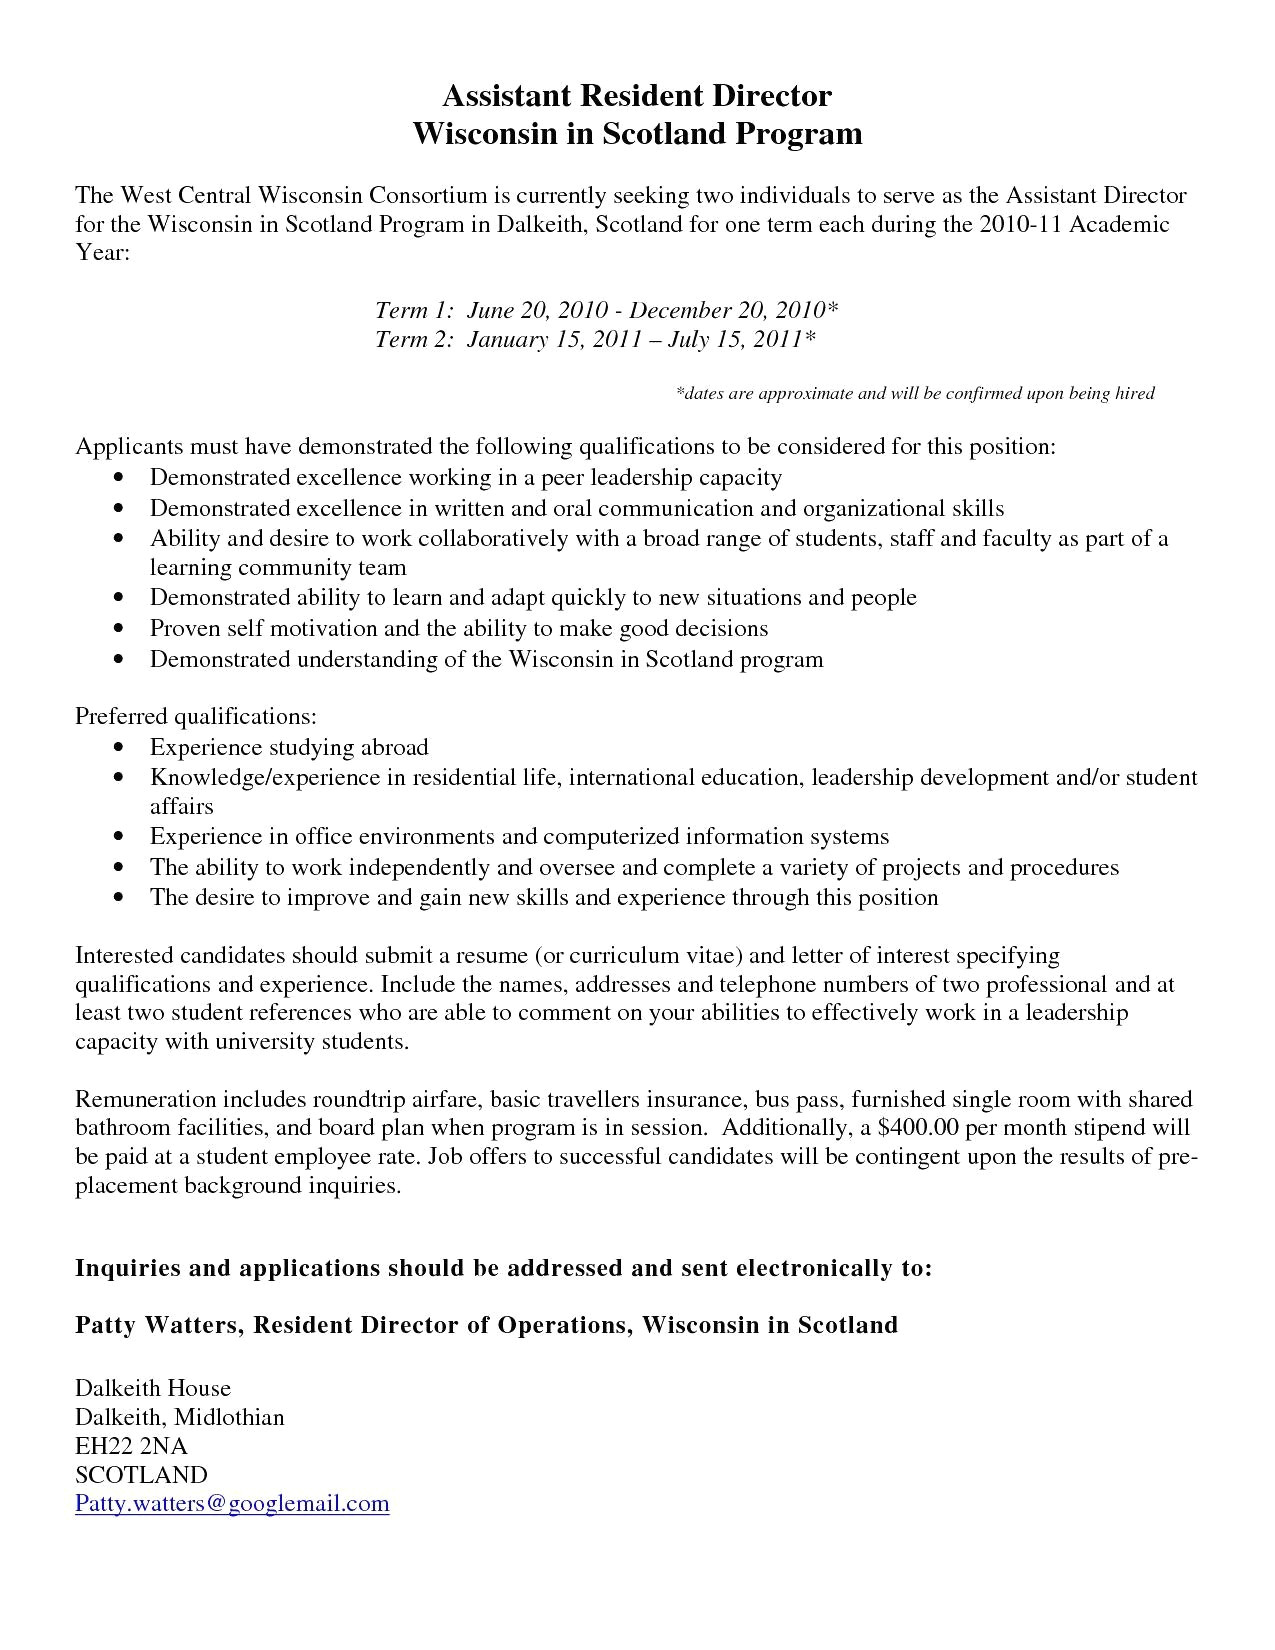 cover letter for resident director position